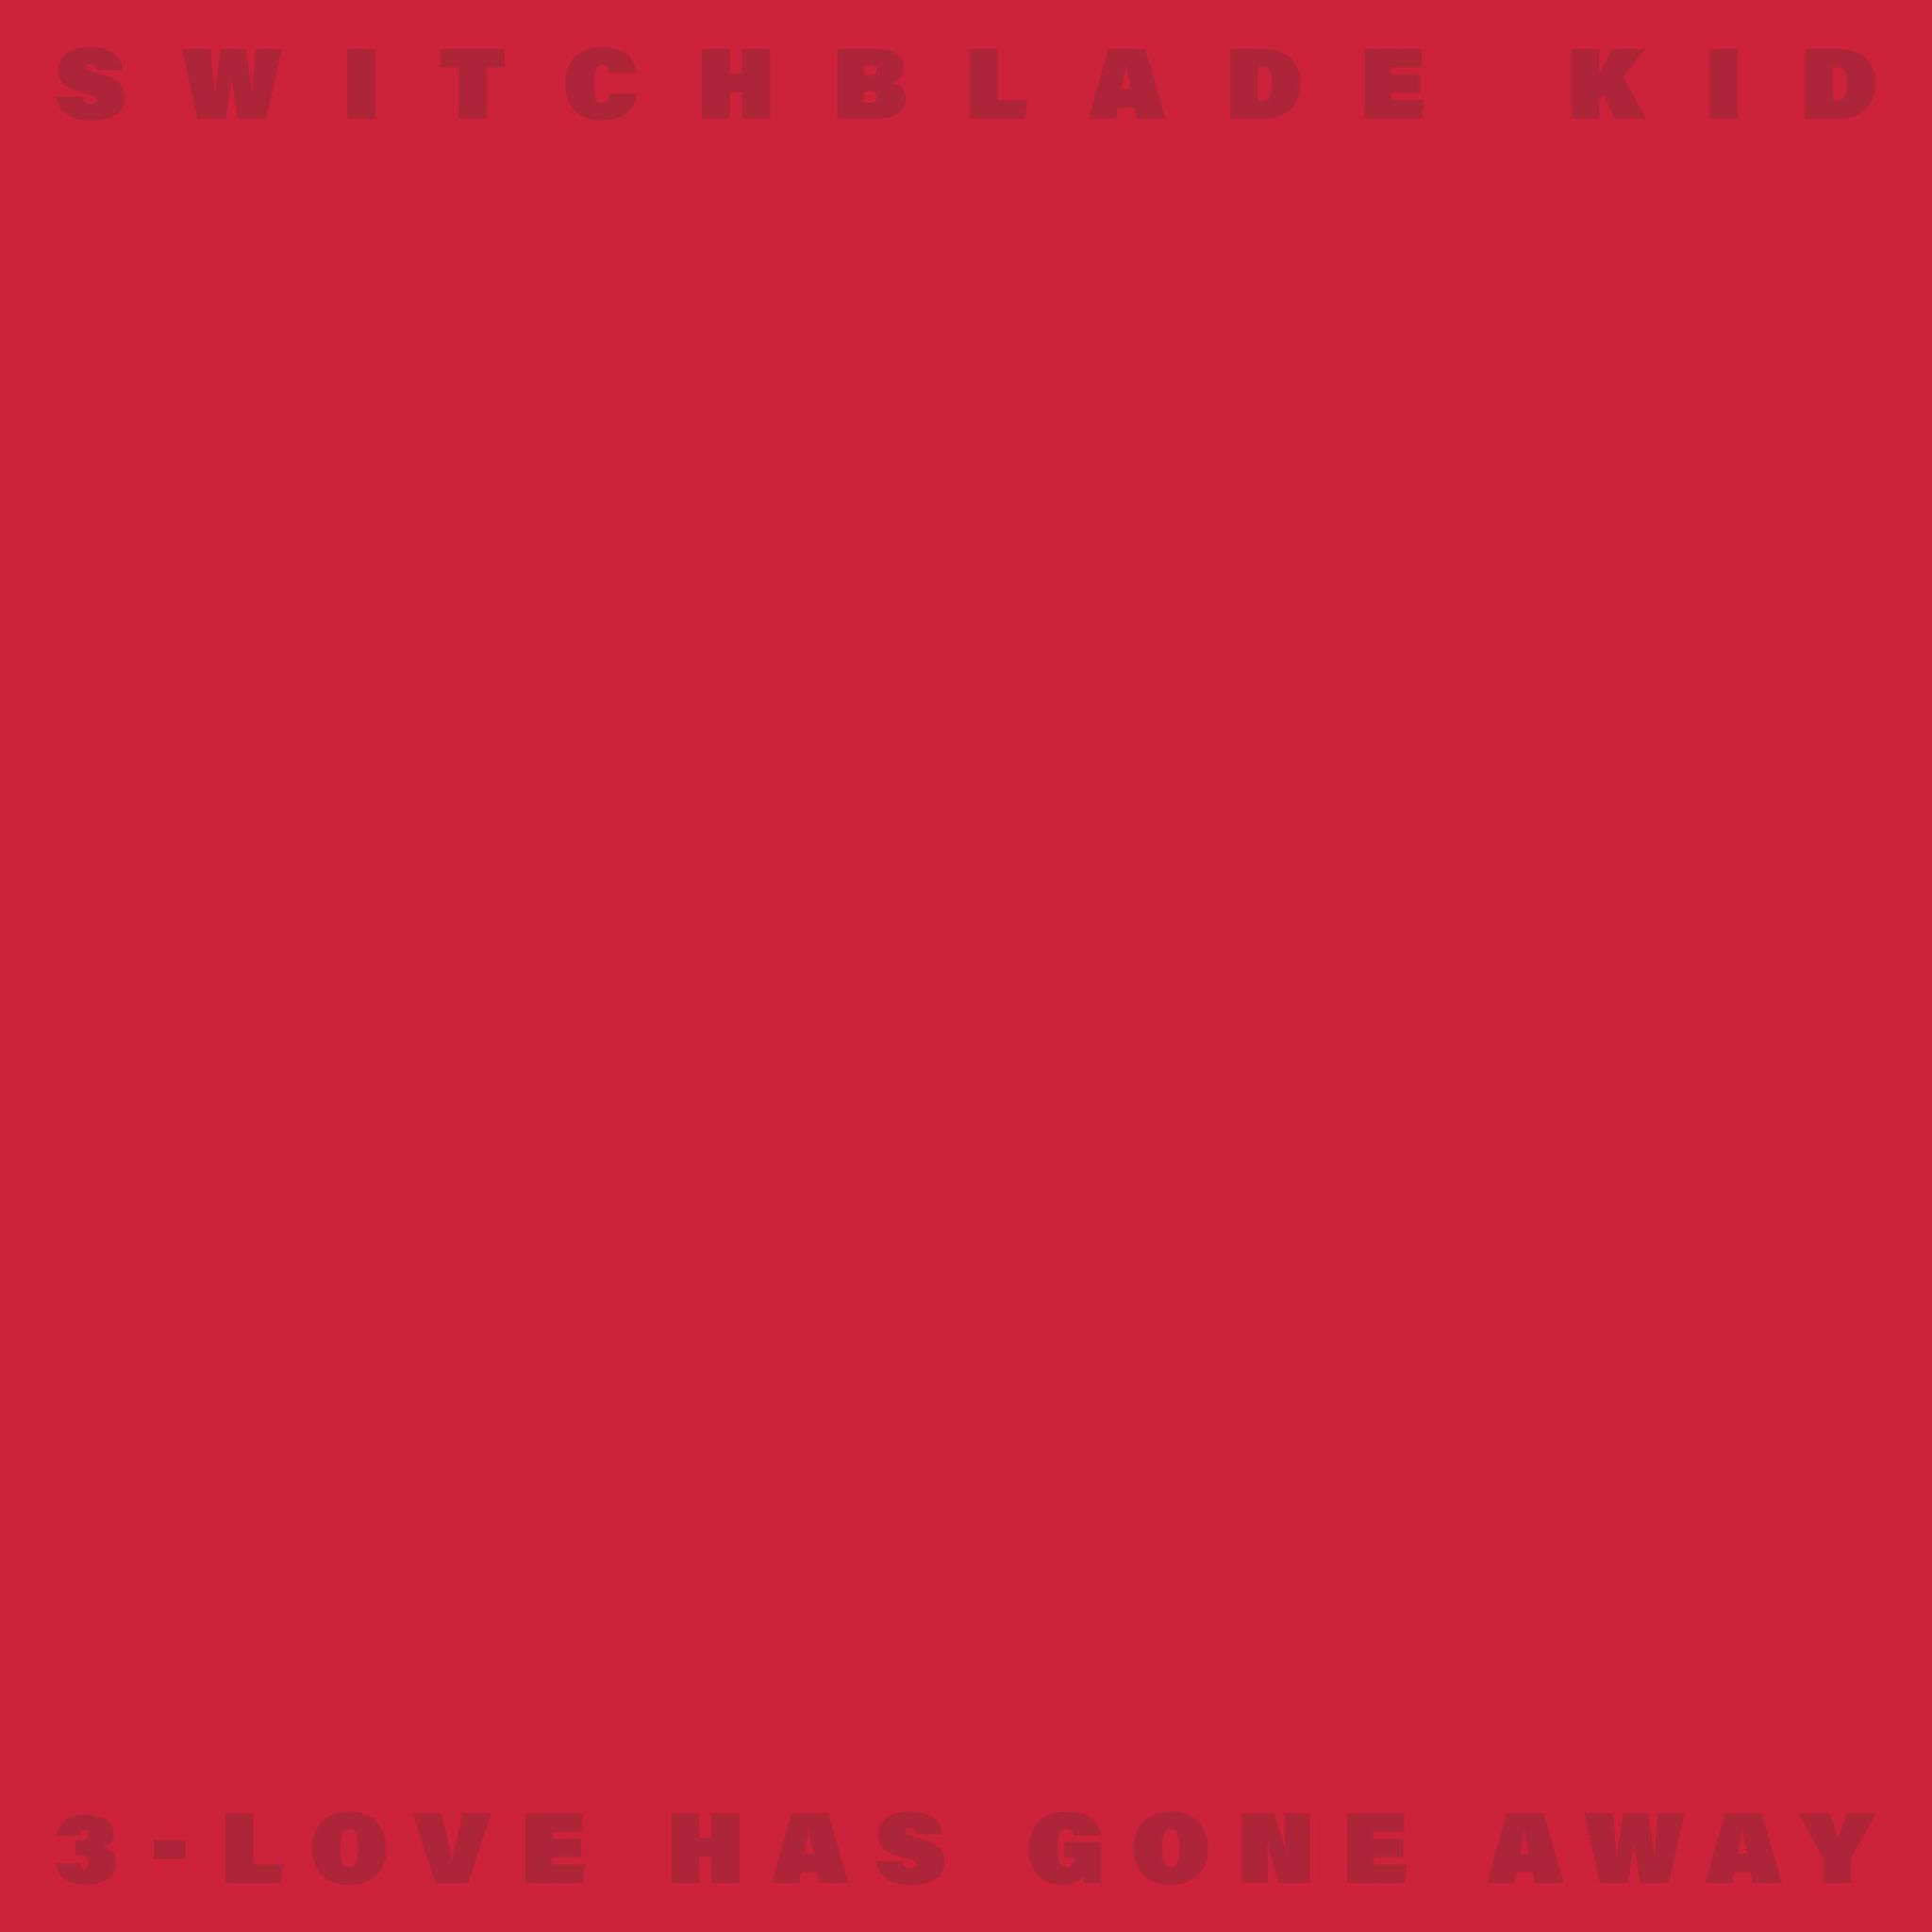 https://thanksihateitrecords.com/wp-content/uploads/2023/04/switchblade-kid-love-has-gone-away.jpg